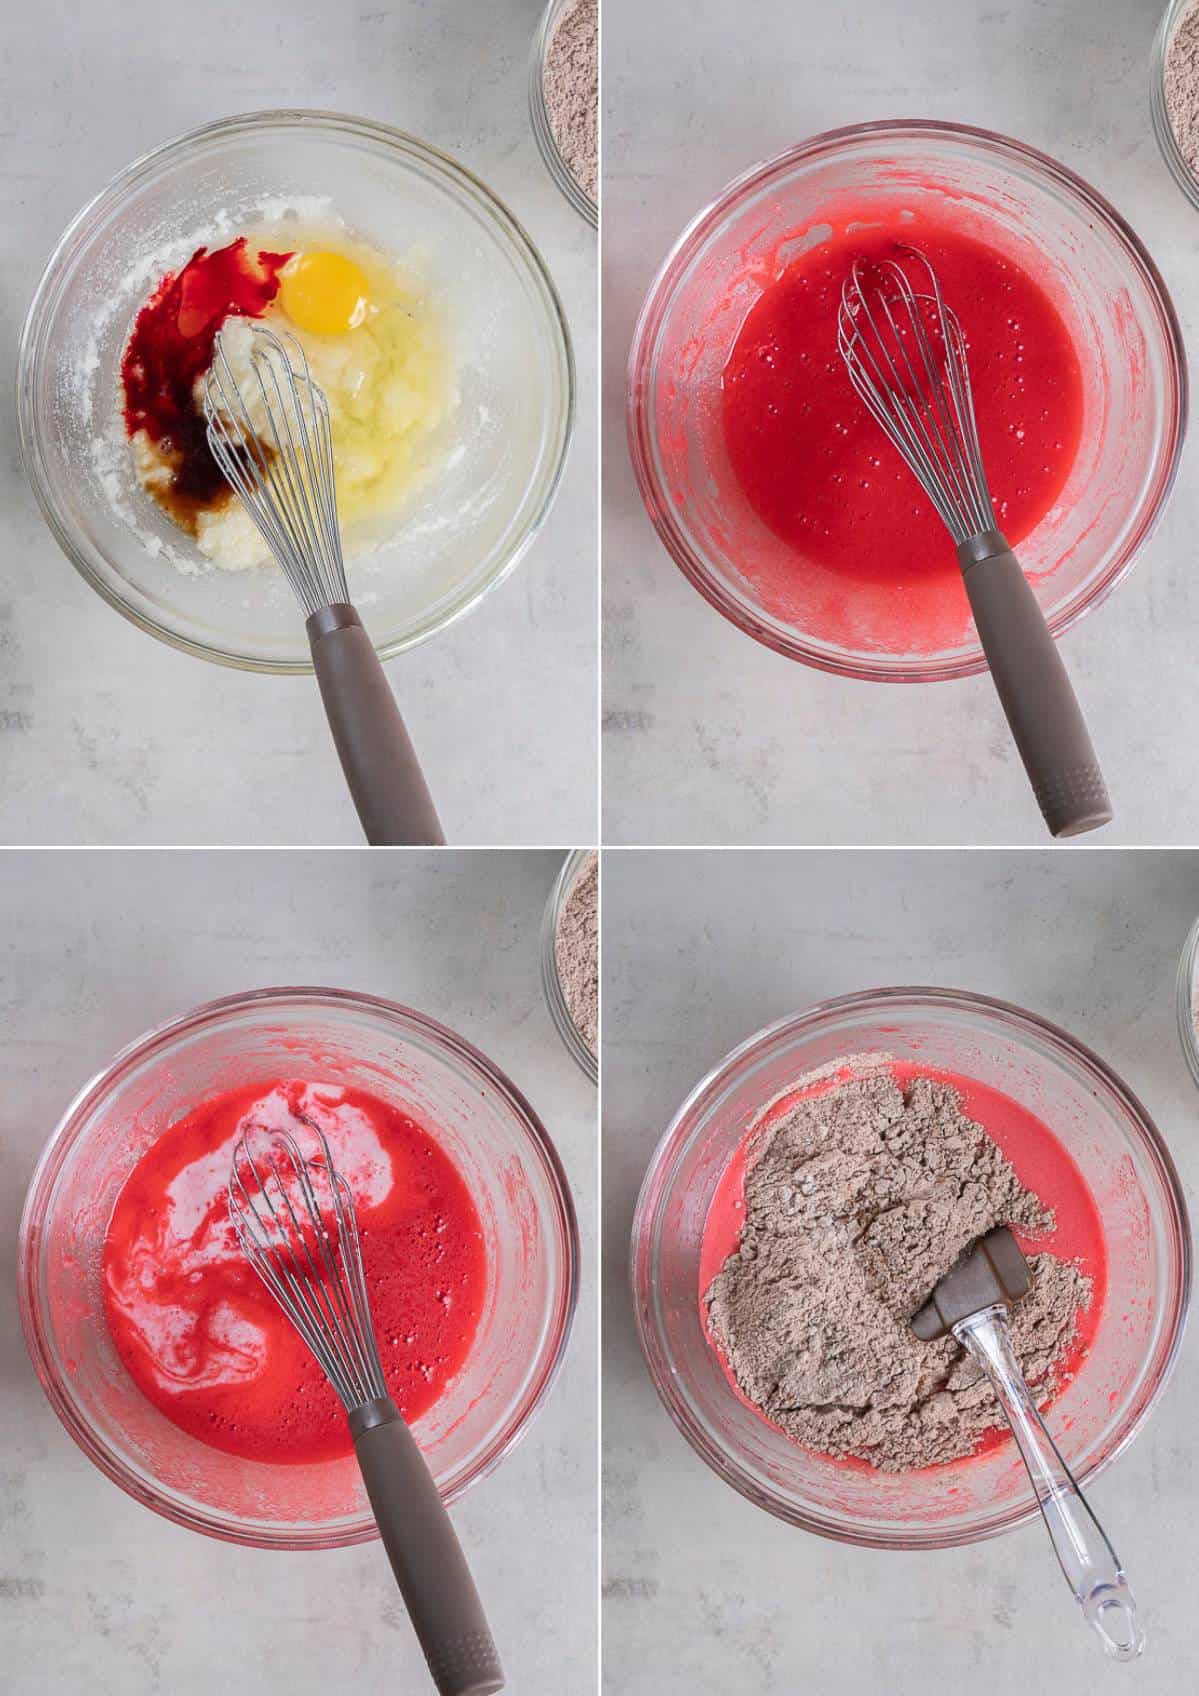 instructional photos for making red velvet muffins